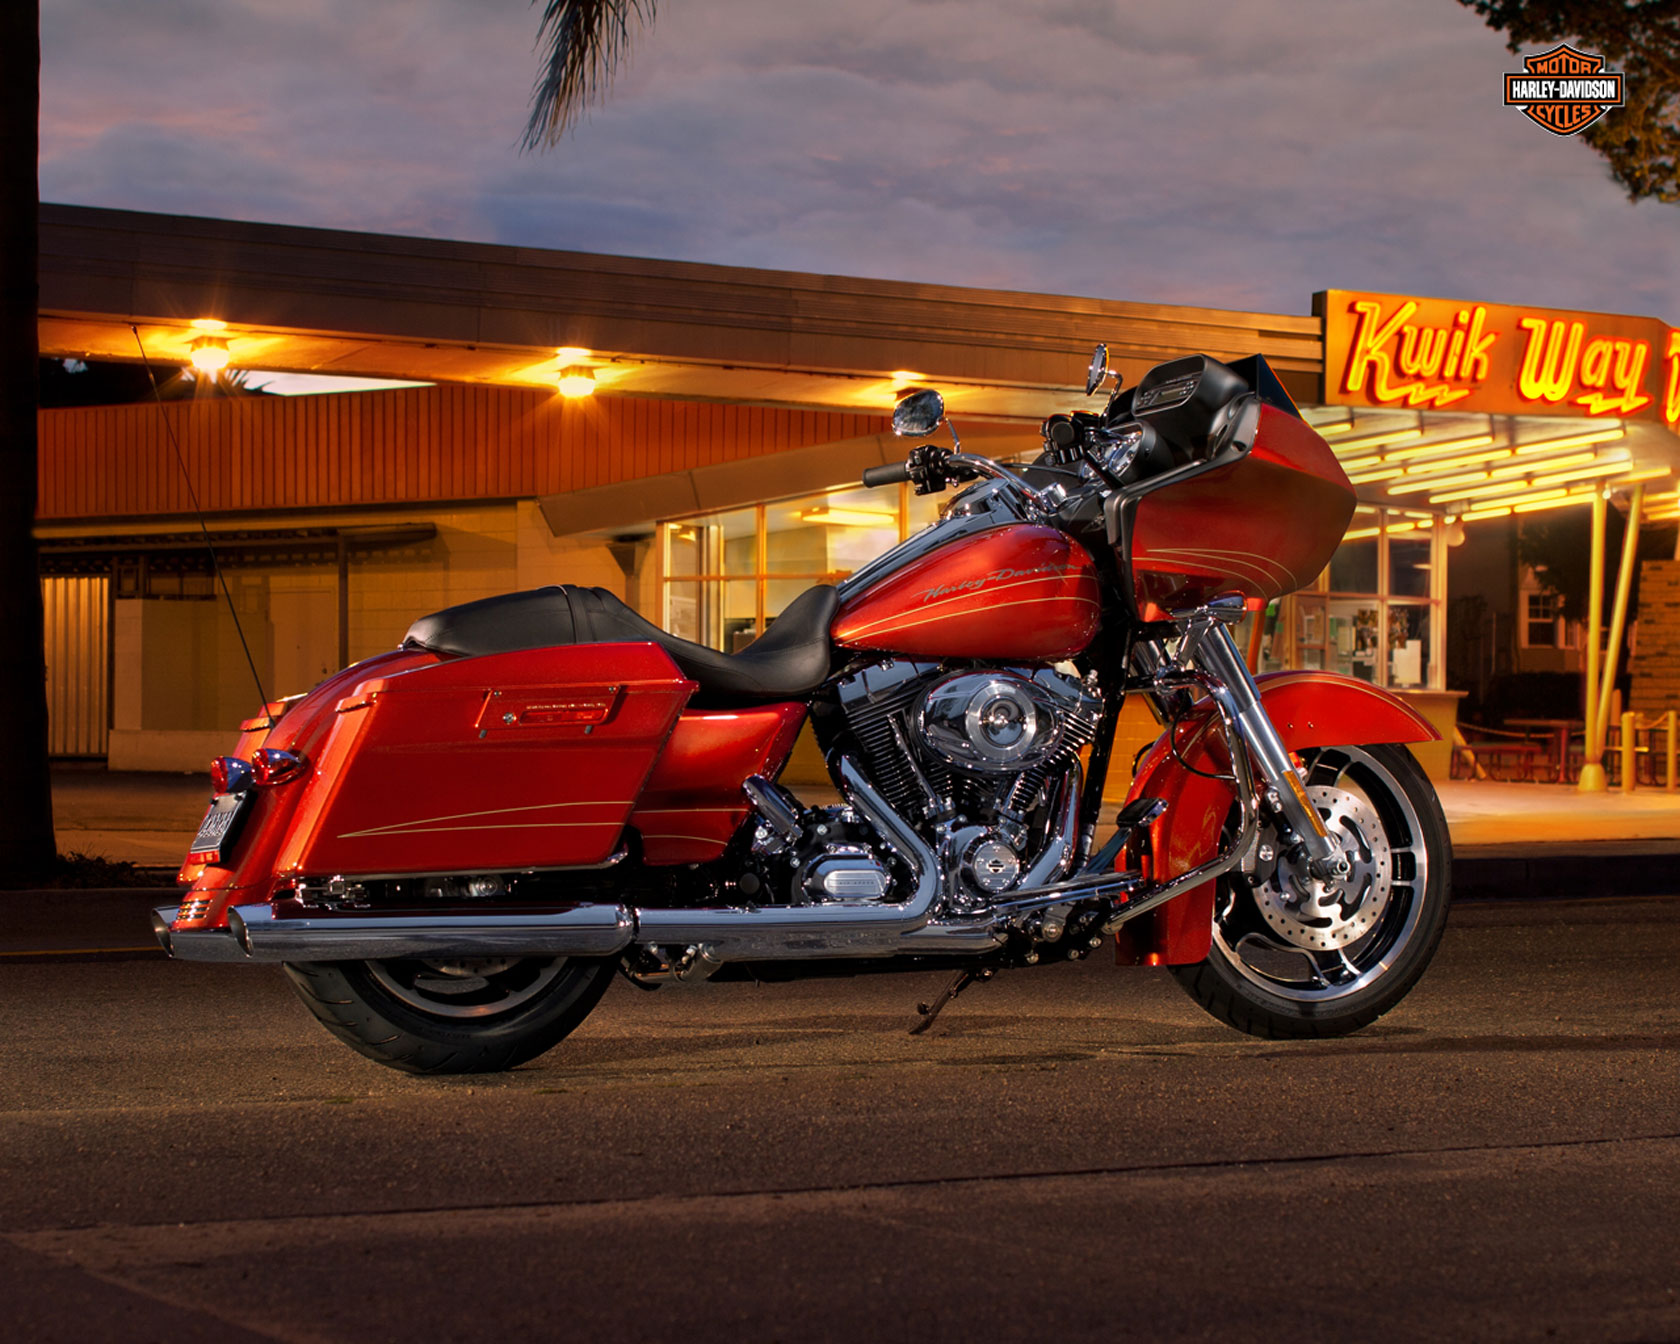 2013 Harley-Davidson FLTRX Road Glide Custom Review